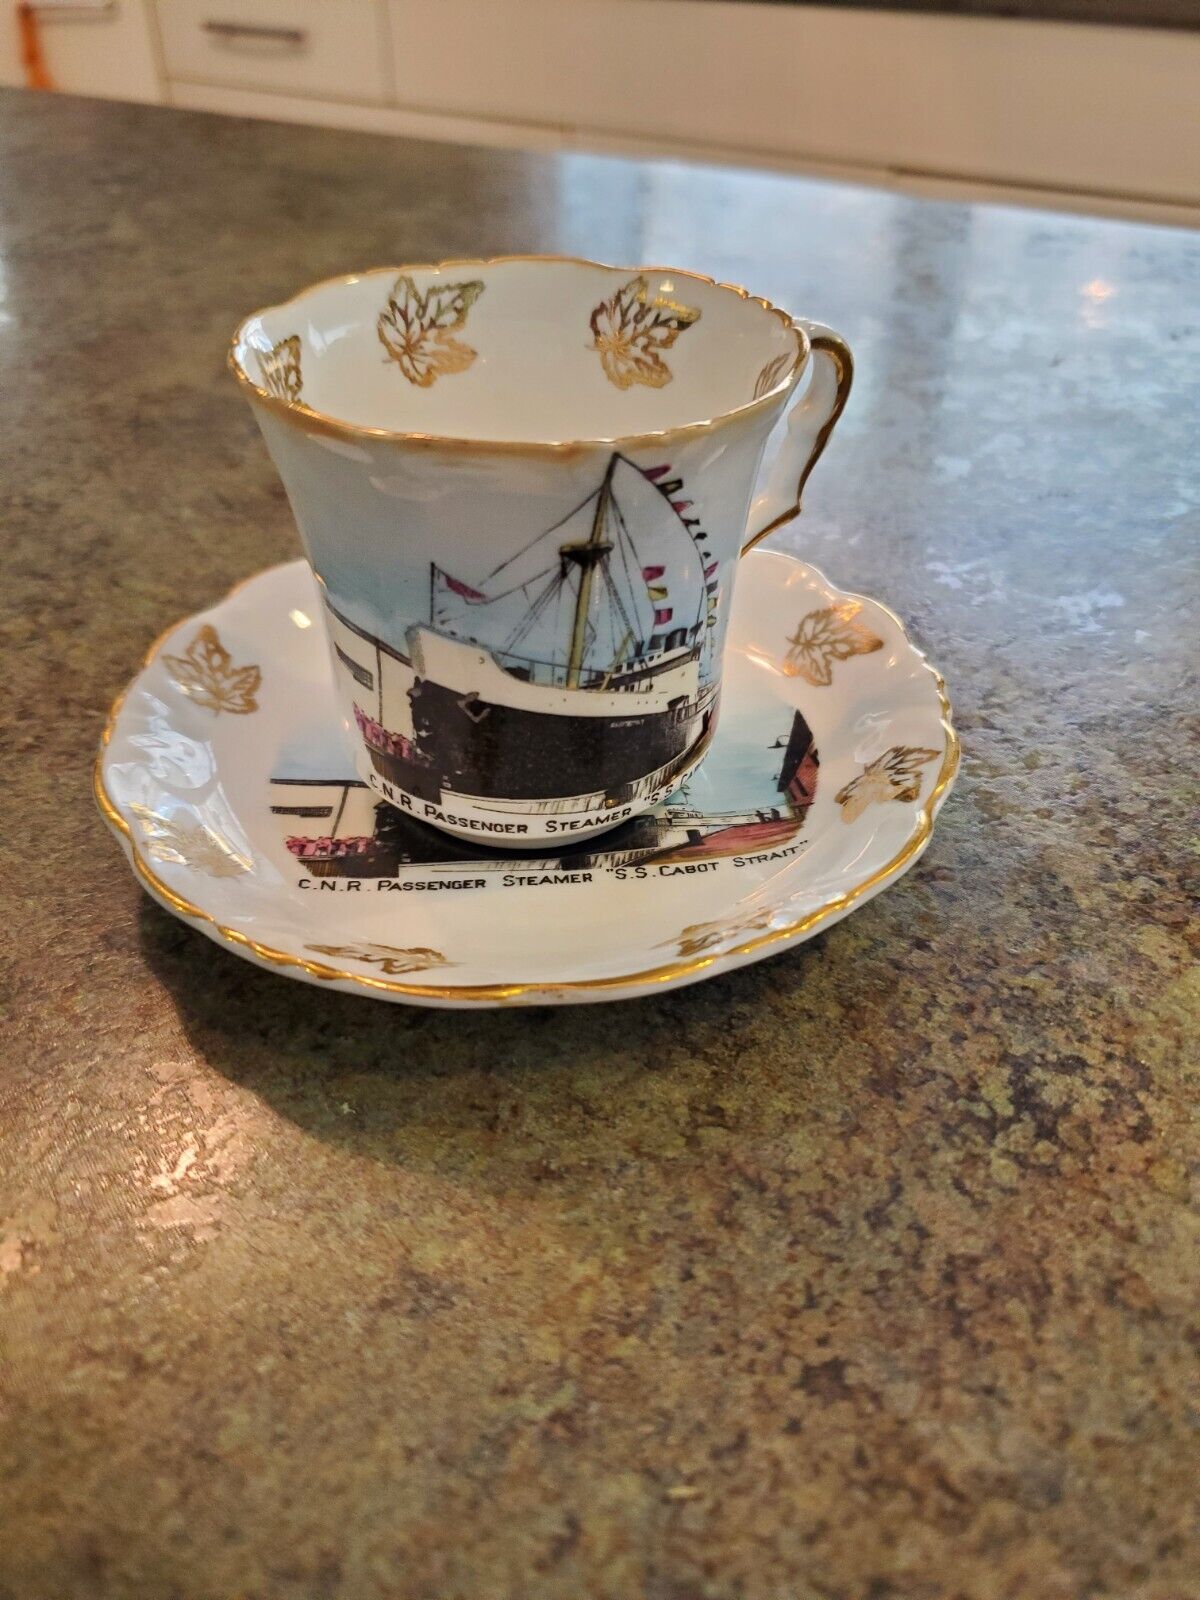 RARE Vintage C.N.R. PASSENGER STEAMER Ship Tea Cup Set S.S. Cabot Strait